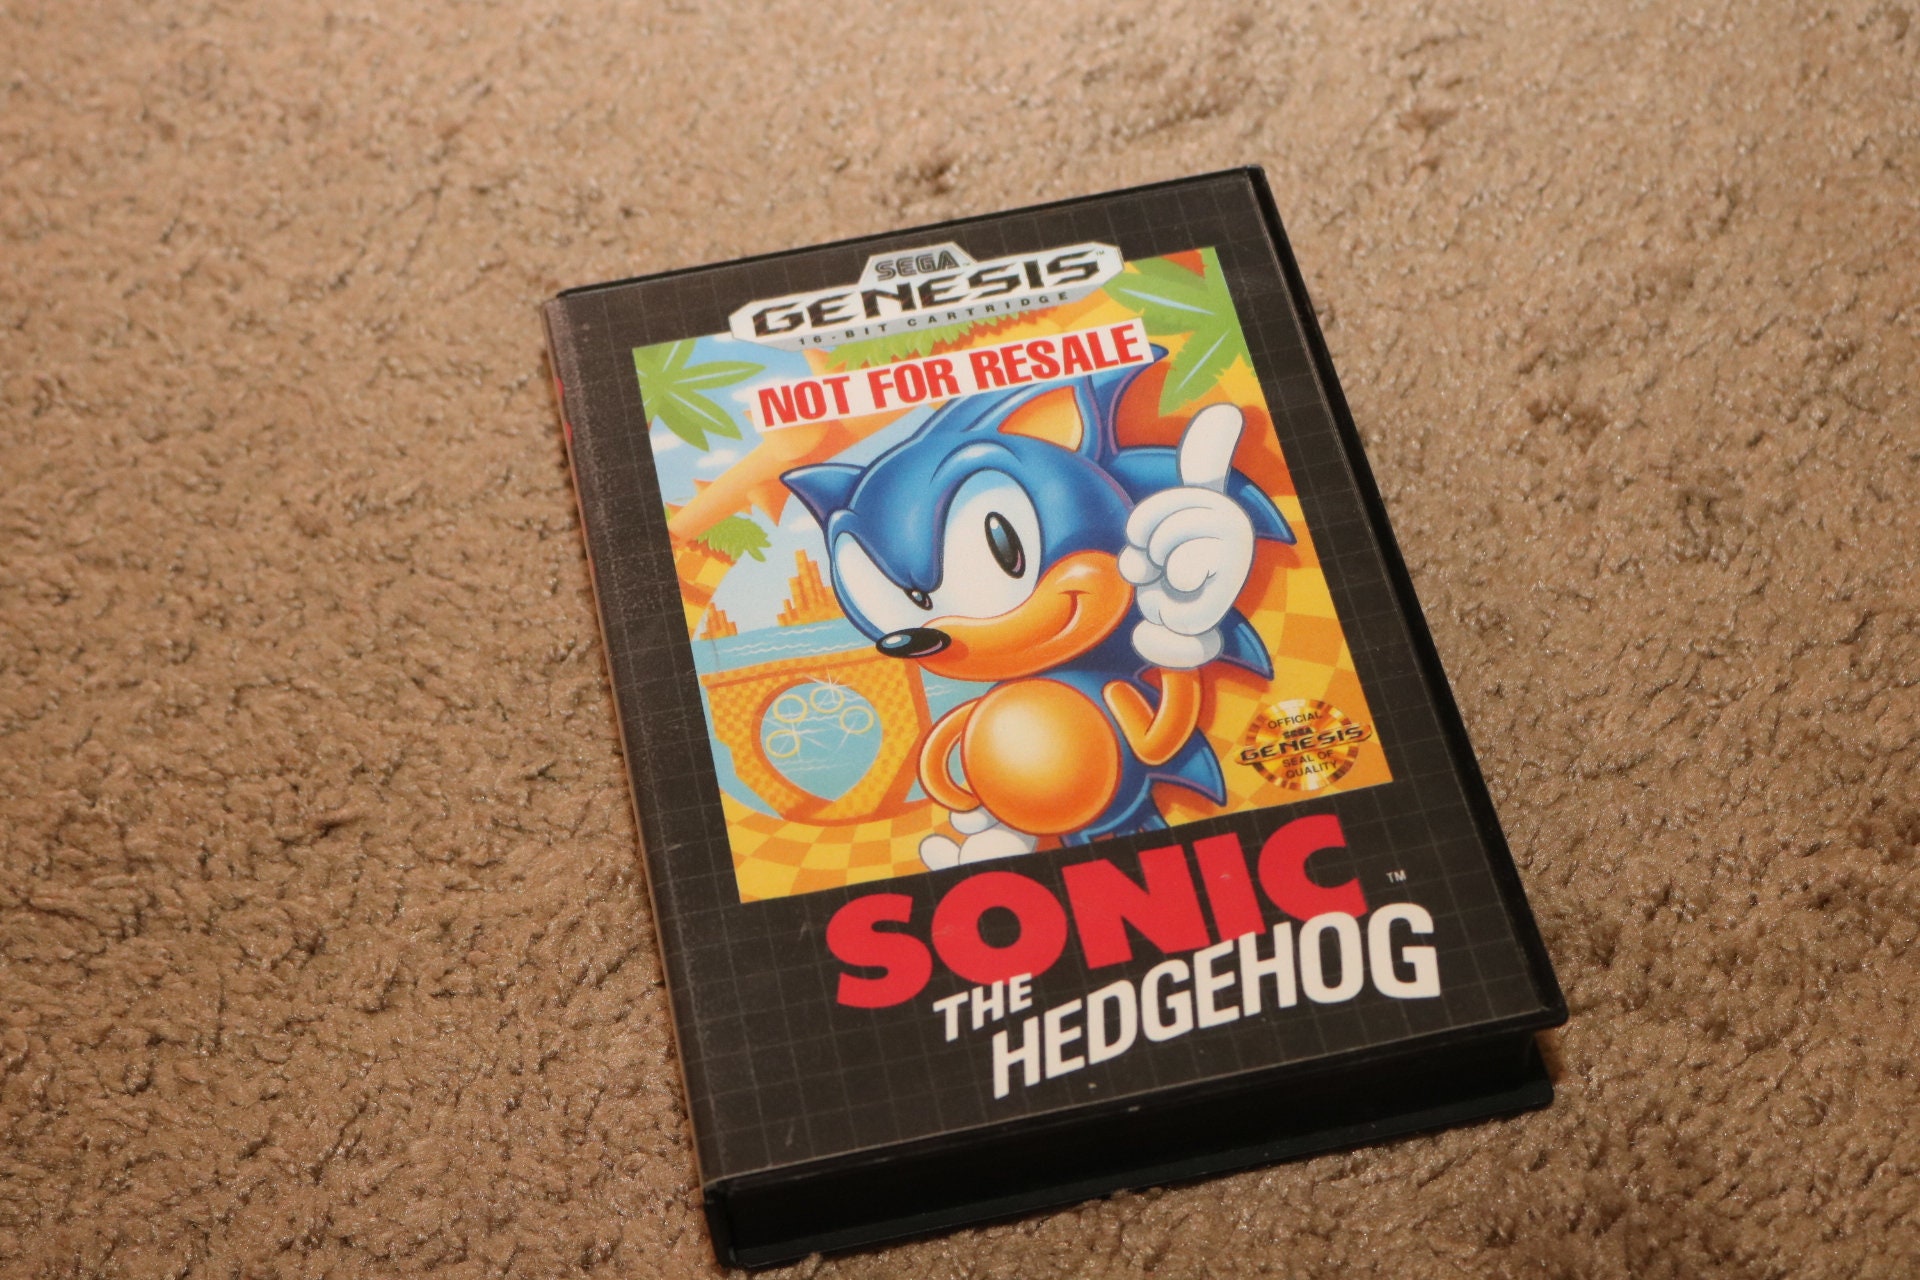 Sonic the Hedgehog 1991 Sega Genesis Complete Rare Game Tested Working Box